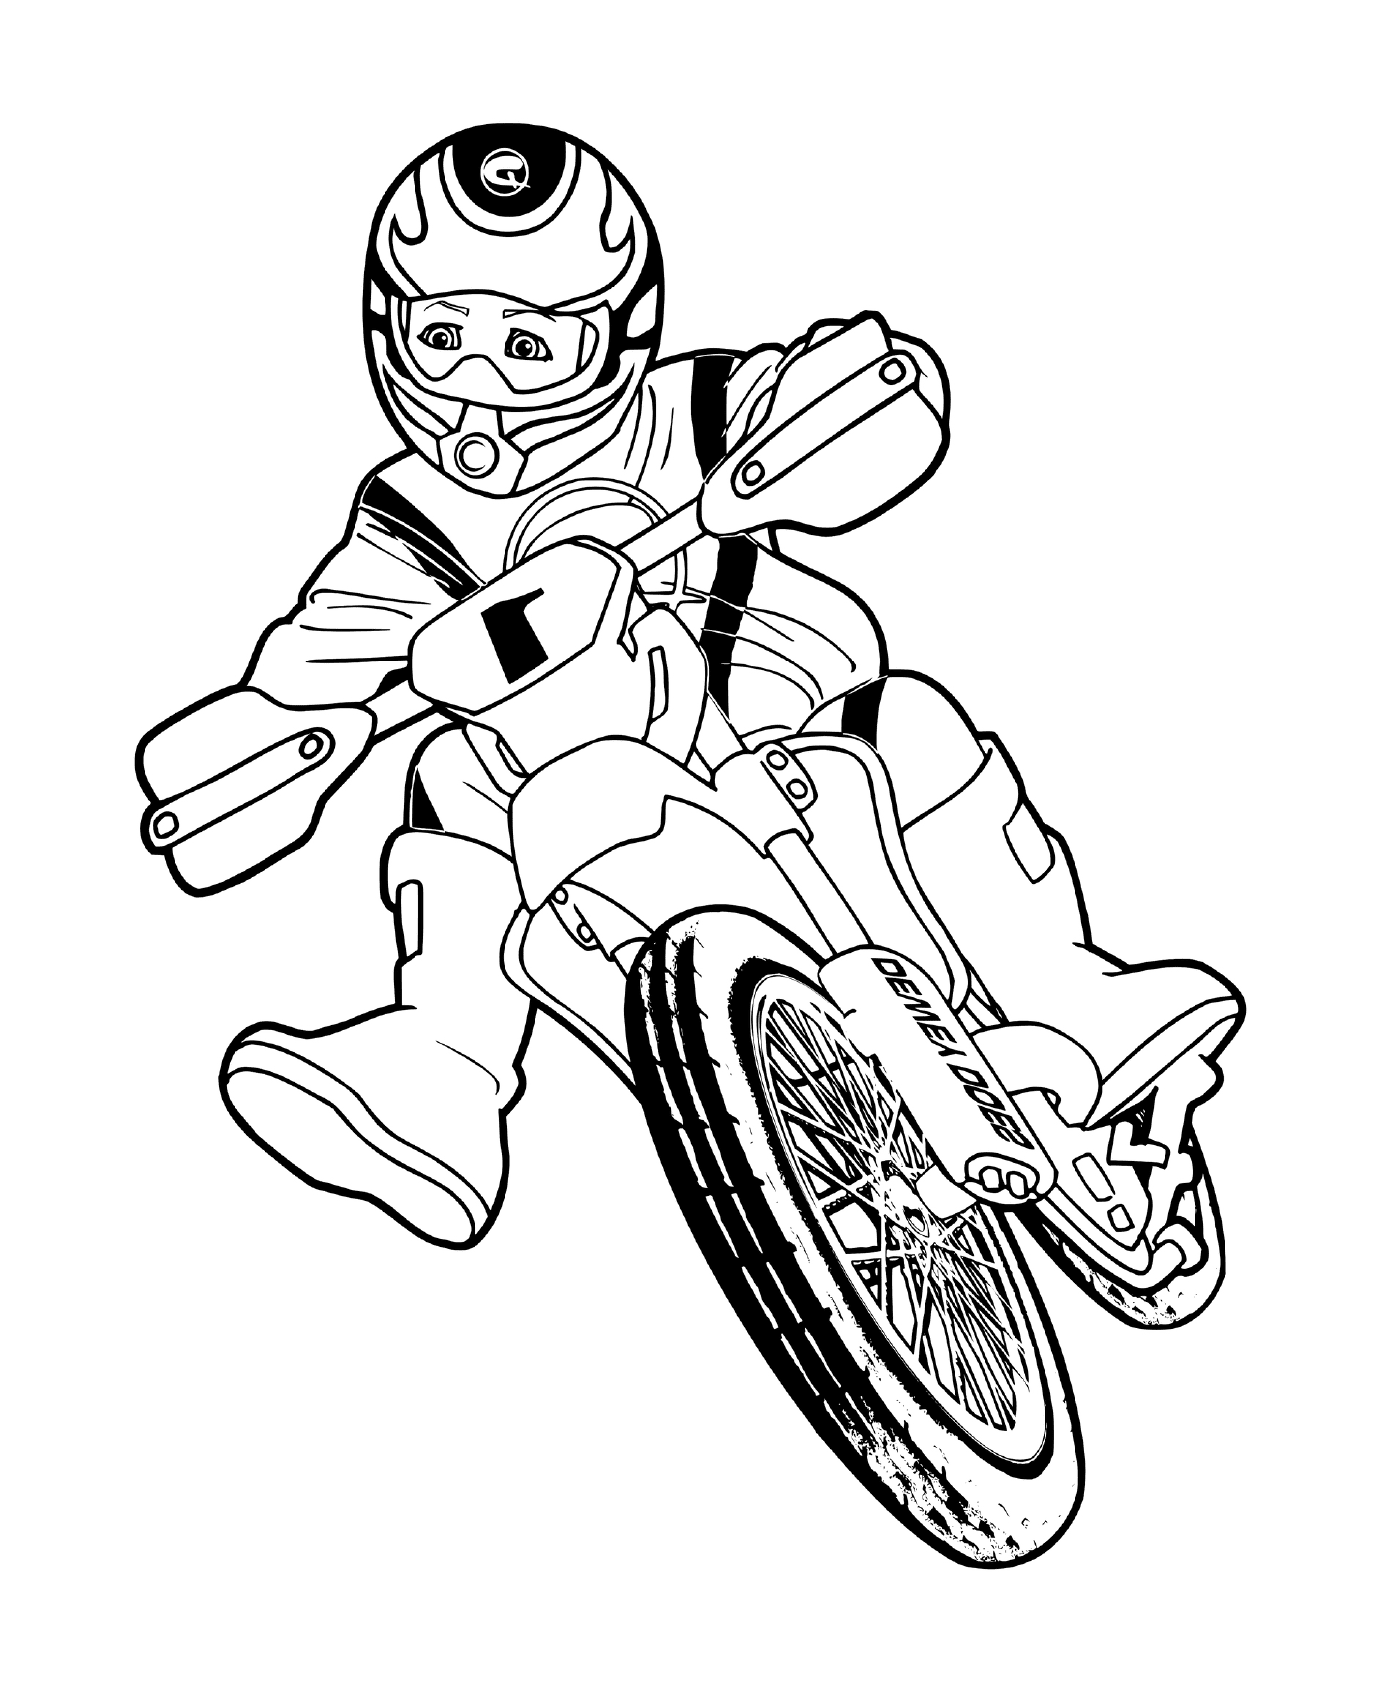  человек на кресте мотоцикла 